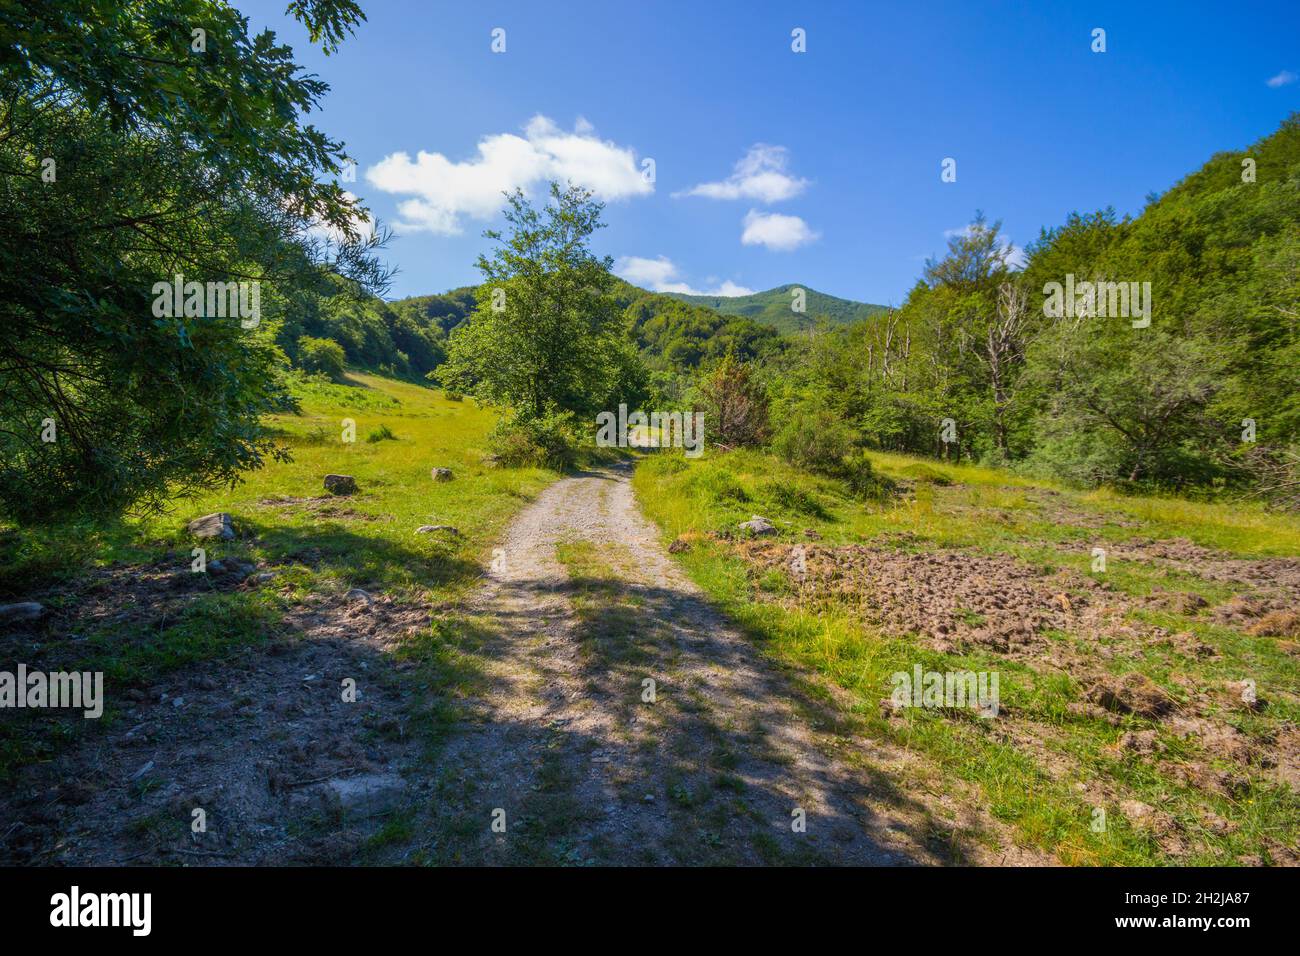 Pathway on the Ramaceto Mount trail near the village of Ventarola, Genoa province, Italy Stock Photo